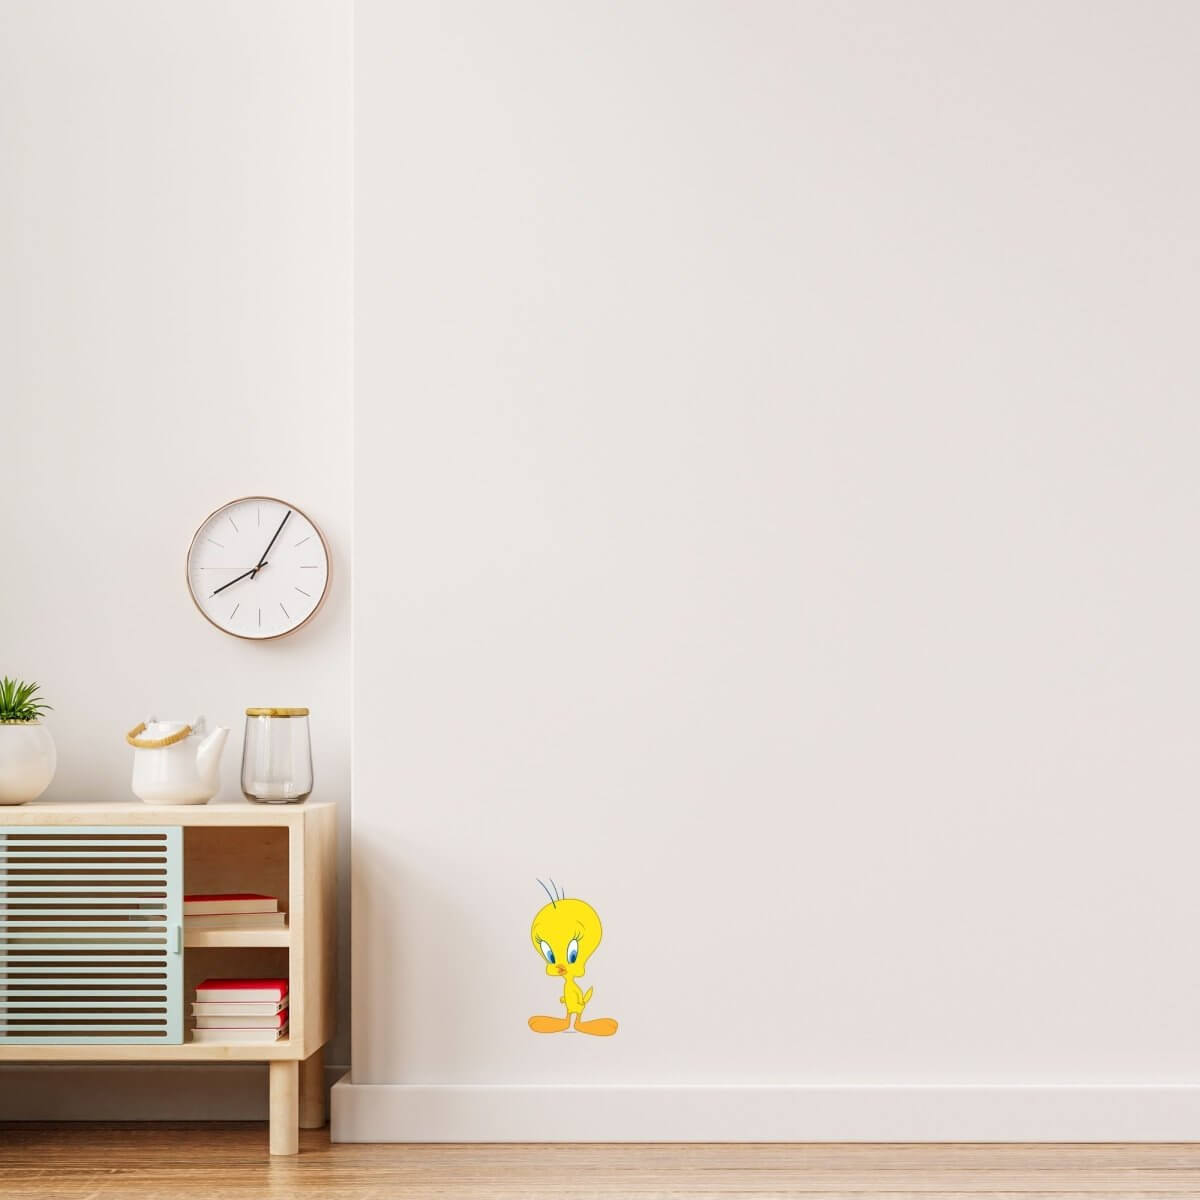 Kismet Decals Looney Tunes Tweety Bird Licensed Wall Sticker - Easy DIY Home & Kids Room Decor Wall Decal Art - Kismet Decals